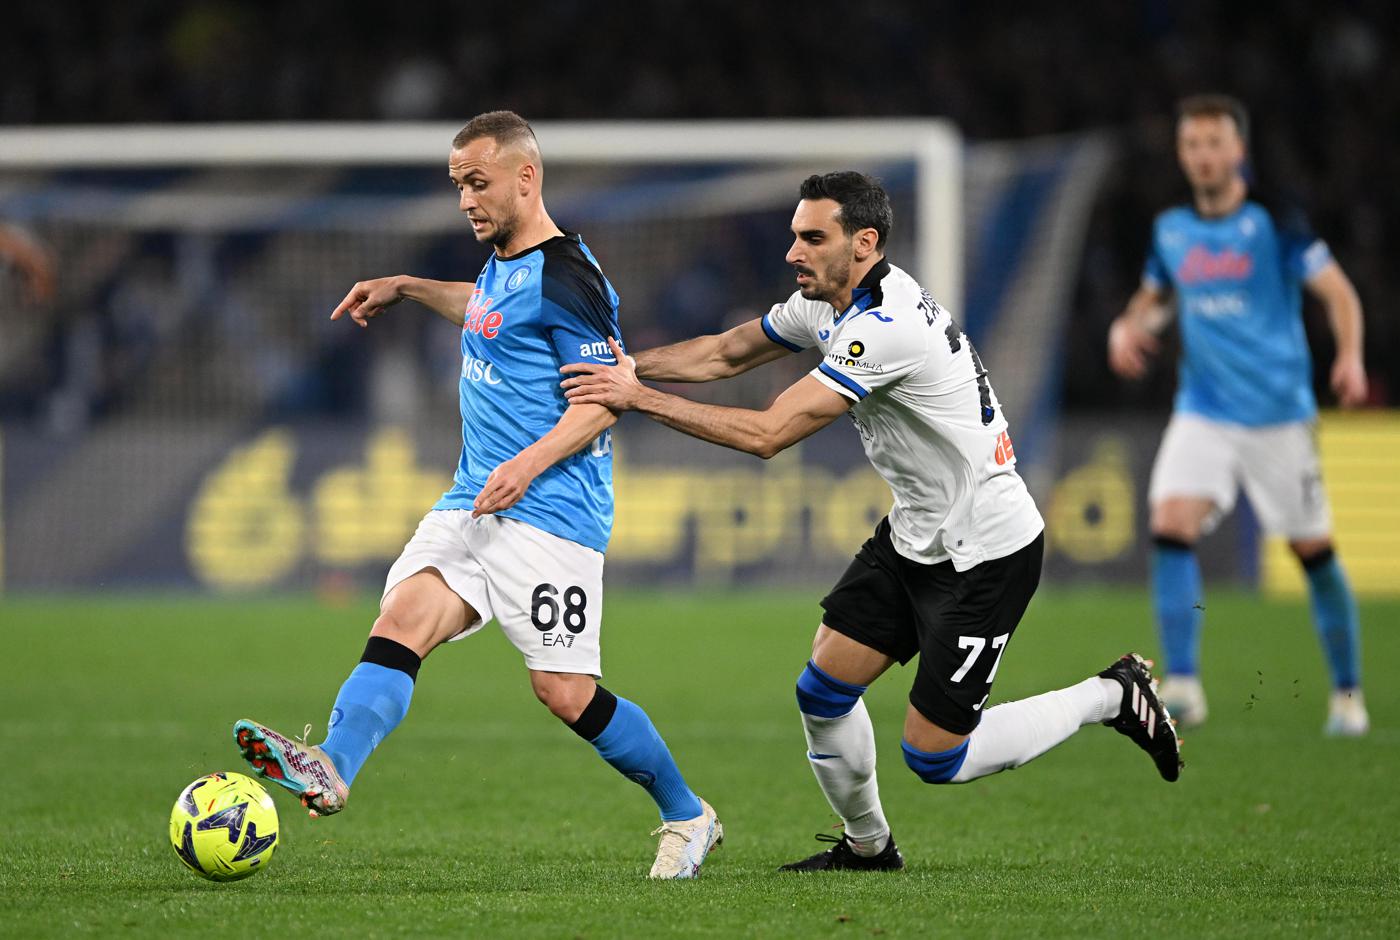 Napoli vs Atalanta - 2-0. Italian Championship, round 26. Match review, statistics.